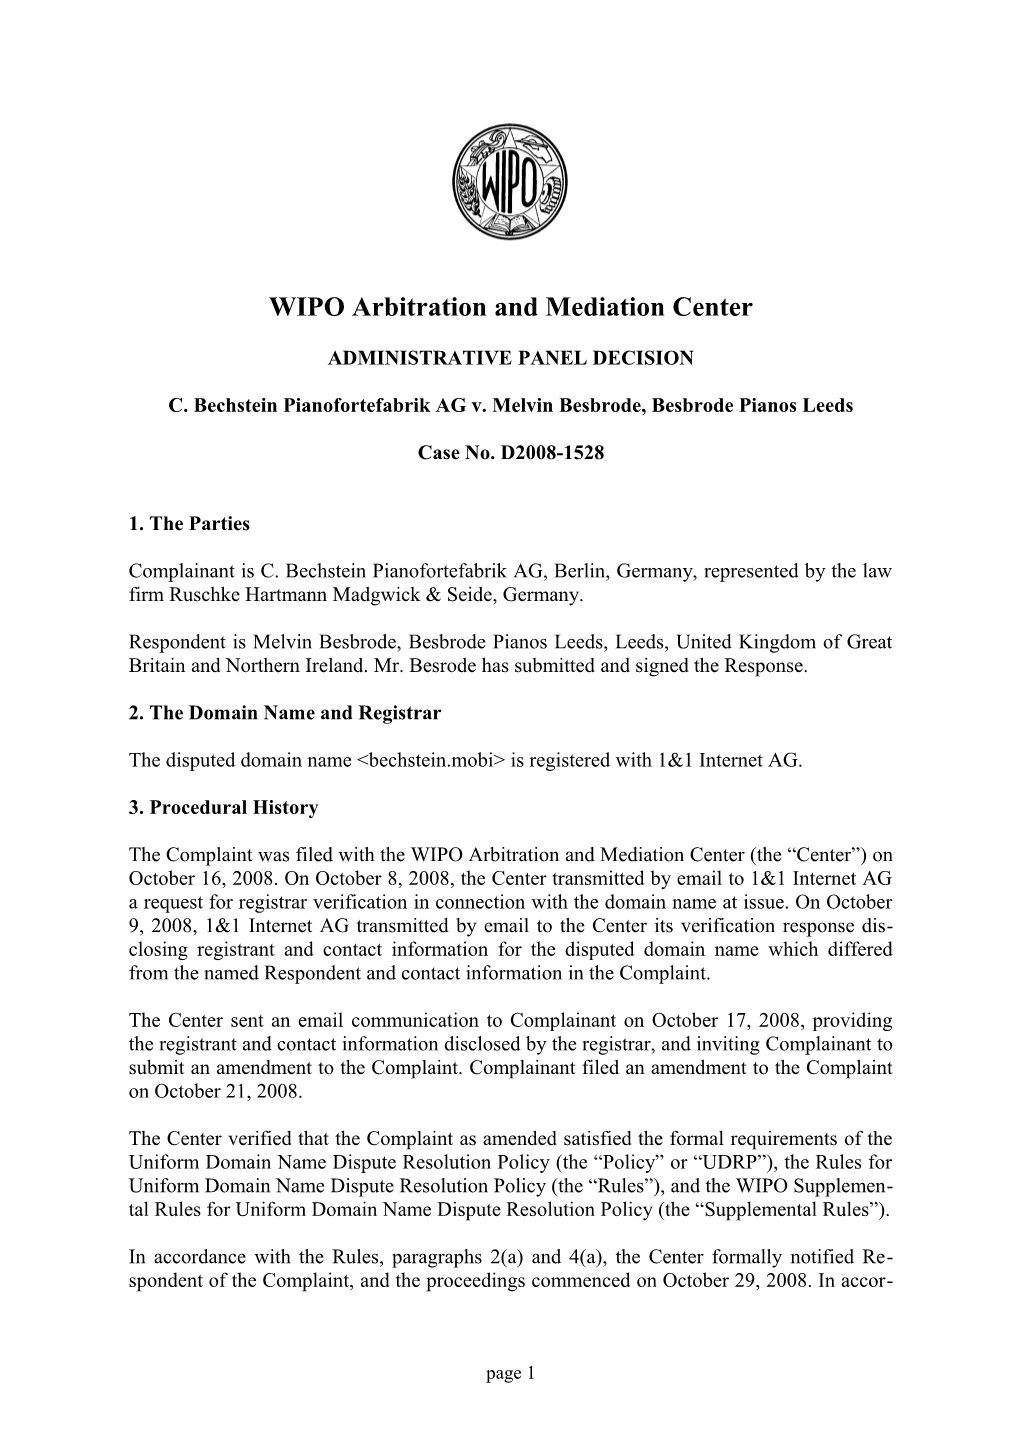 WIPO Domain Name Dispute: Case DFR2075-0061